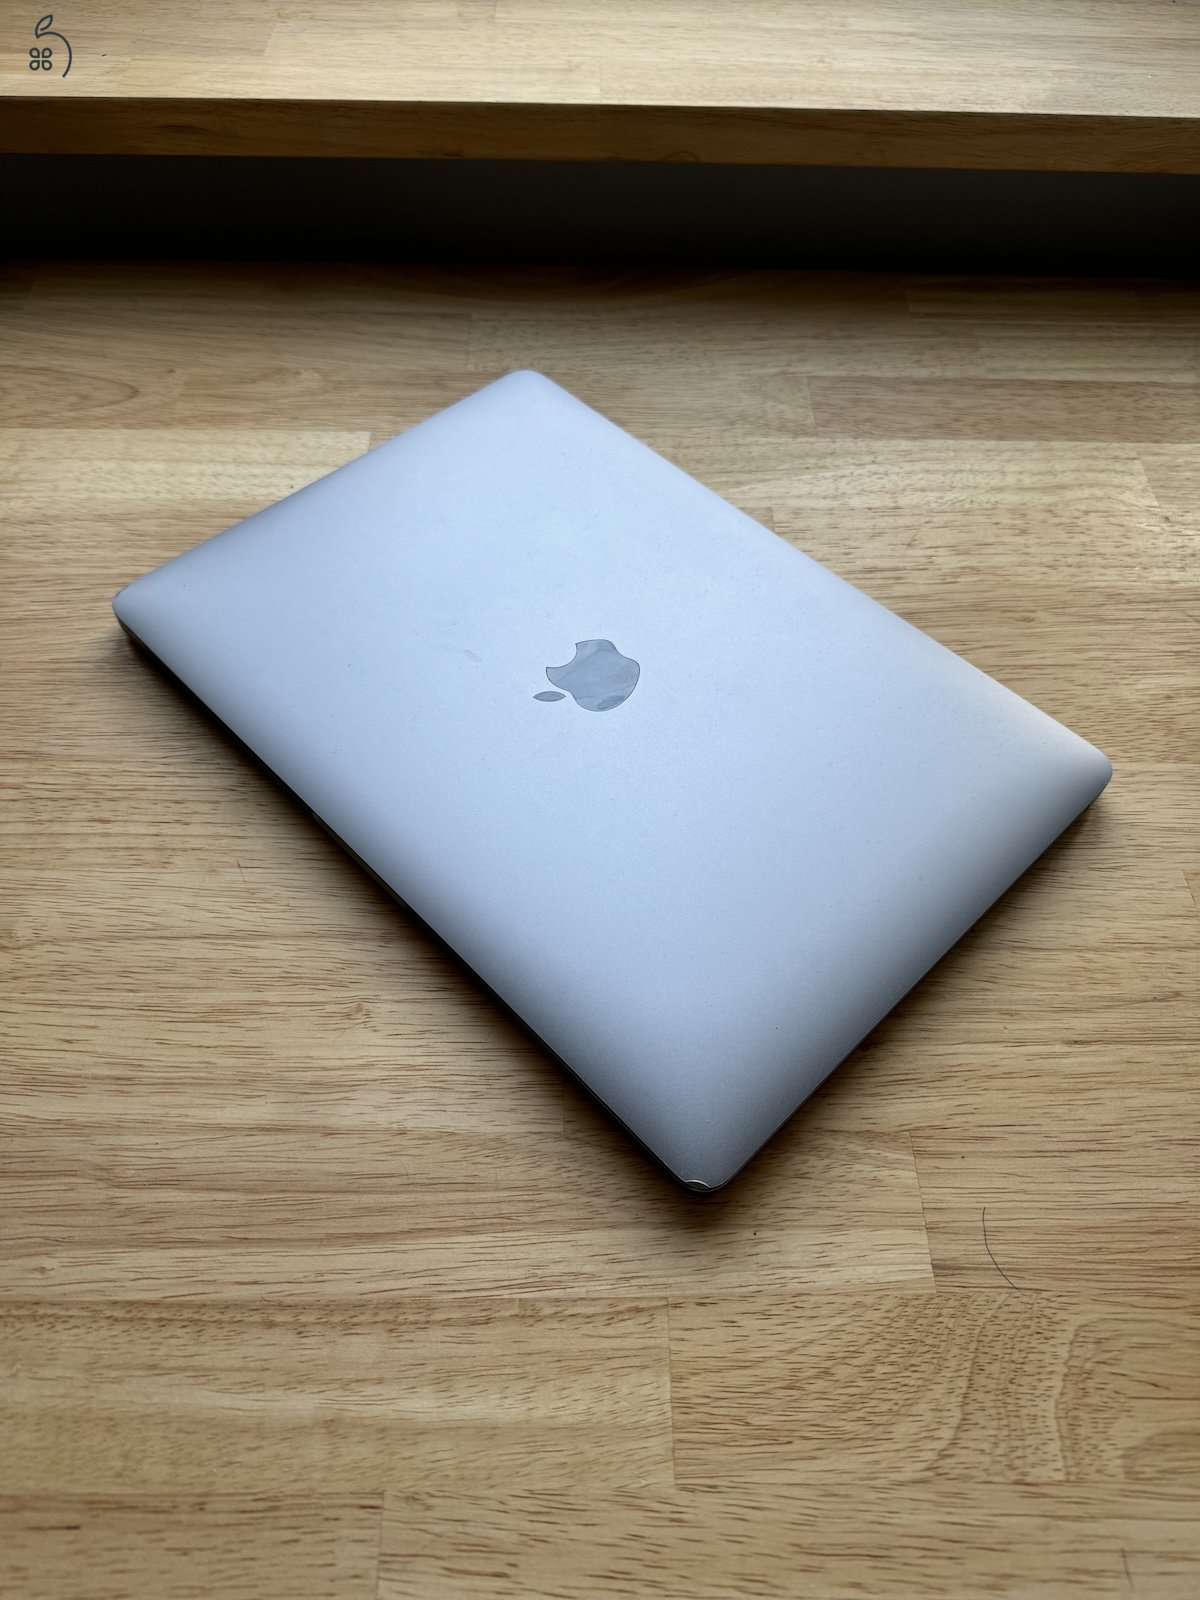 MacBook Pro 2018, 13,3-inch Retina, 16GB RAM, 256GB SSD, 2,3GHz Quad-Core i5